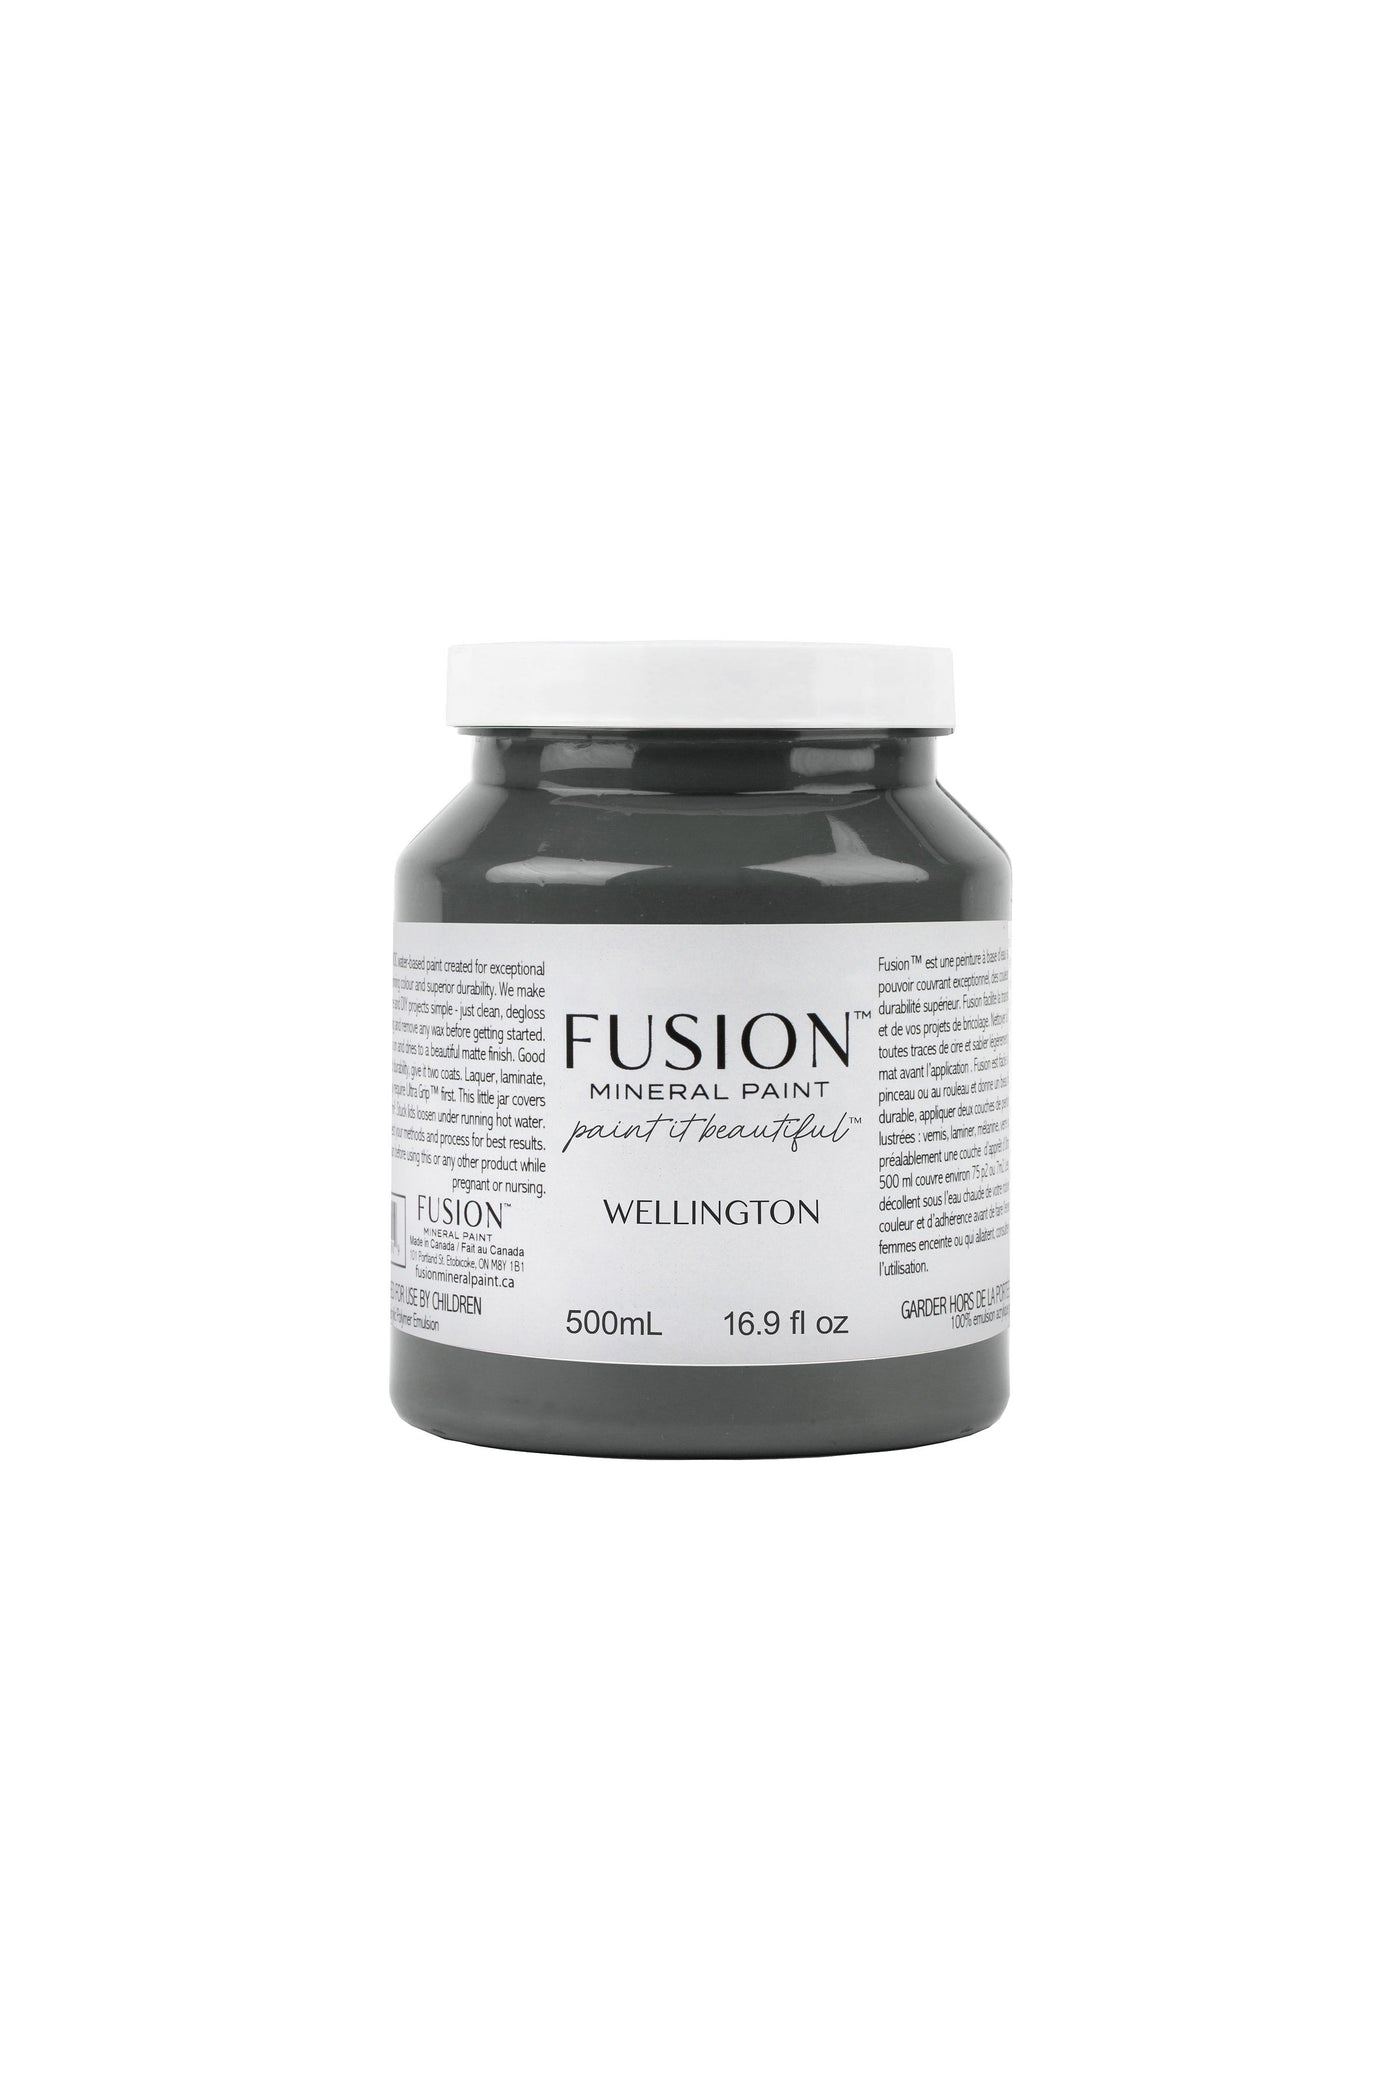 Fusion Mineral Paint Wellington deep charcoal grey black For the Love Creations Australian retailer